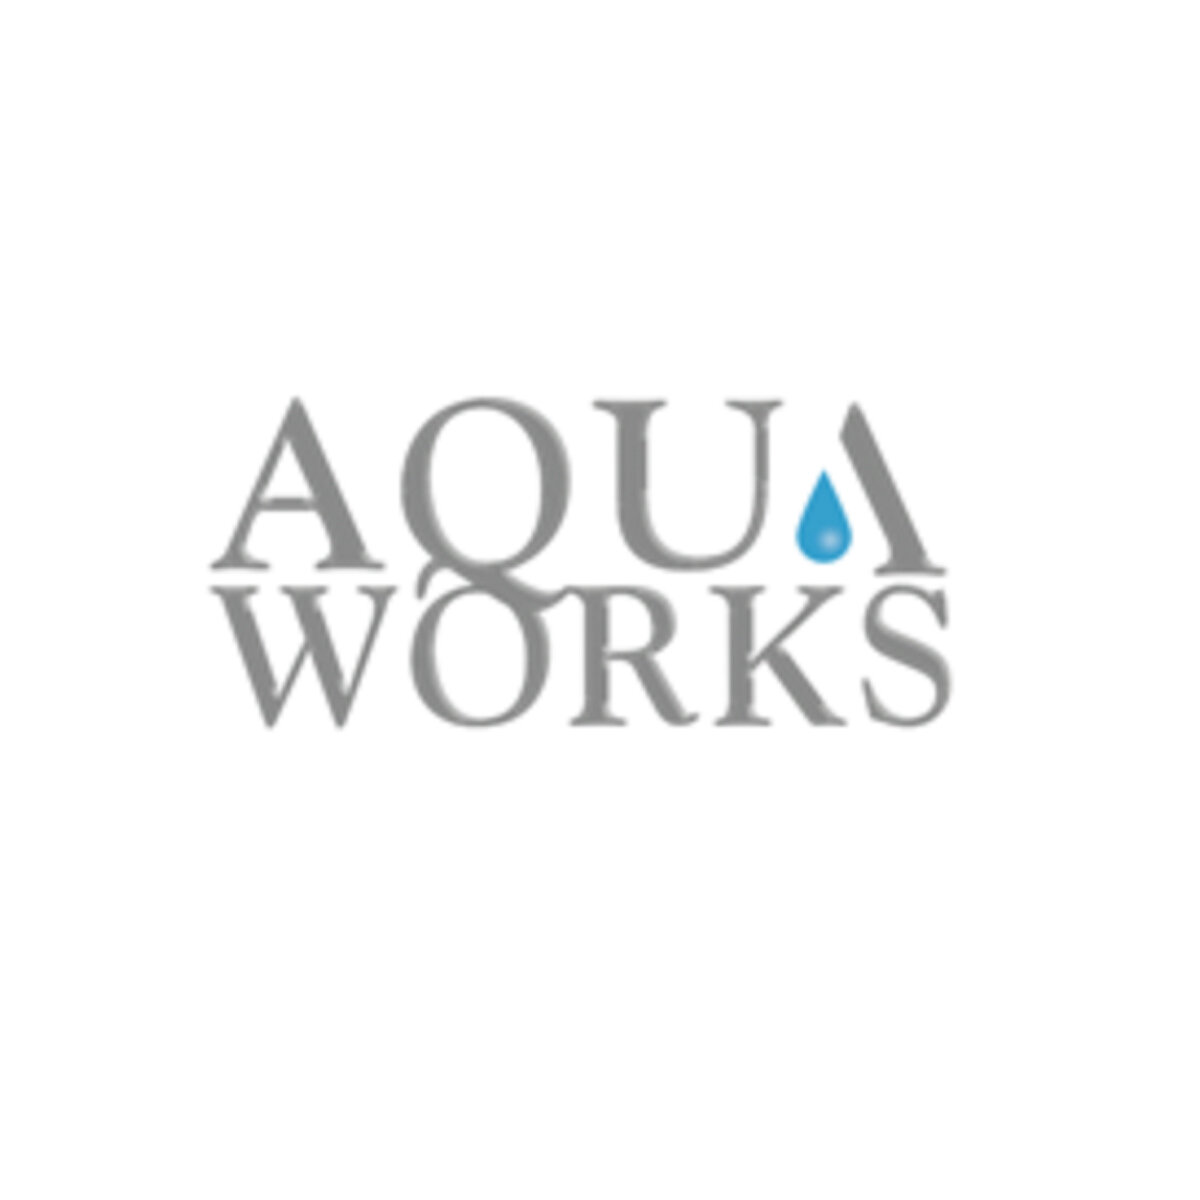 Aqua Works.jpg